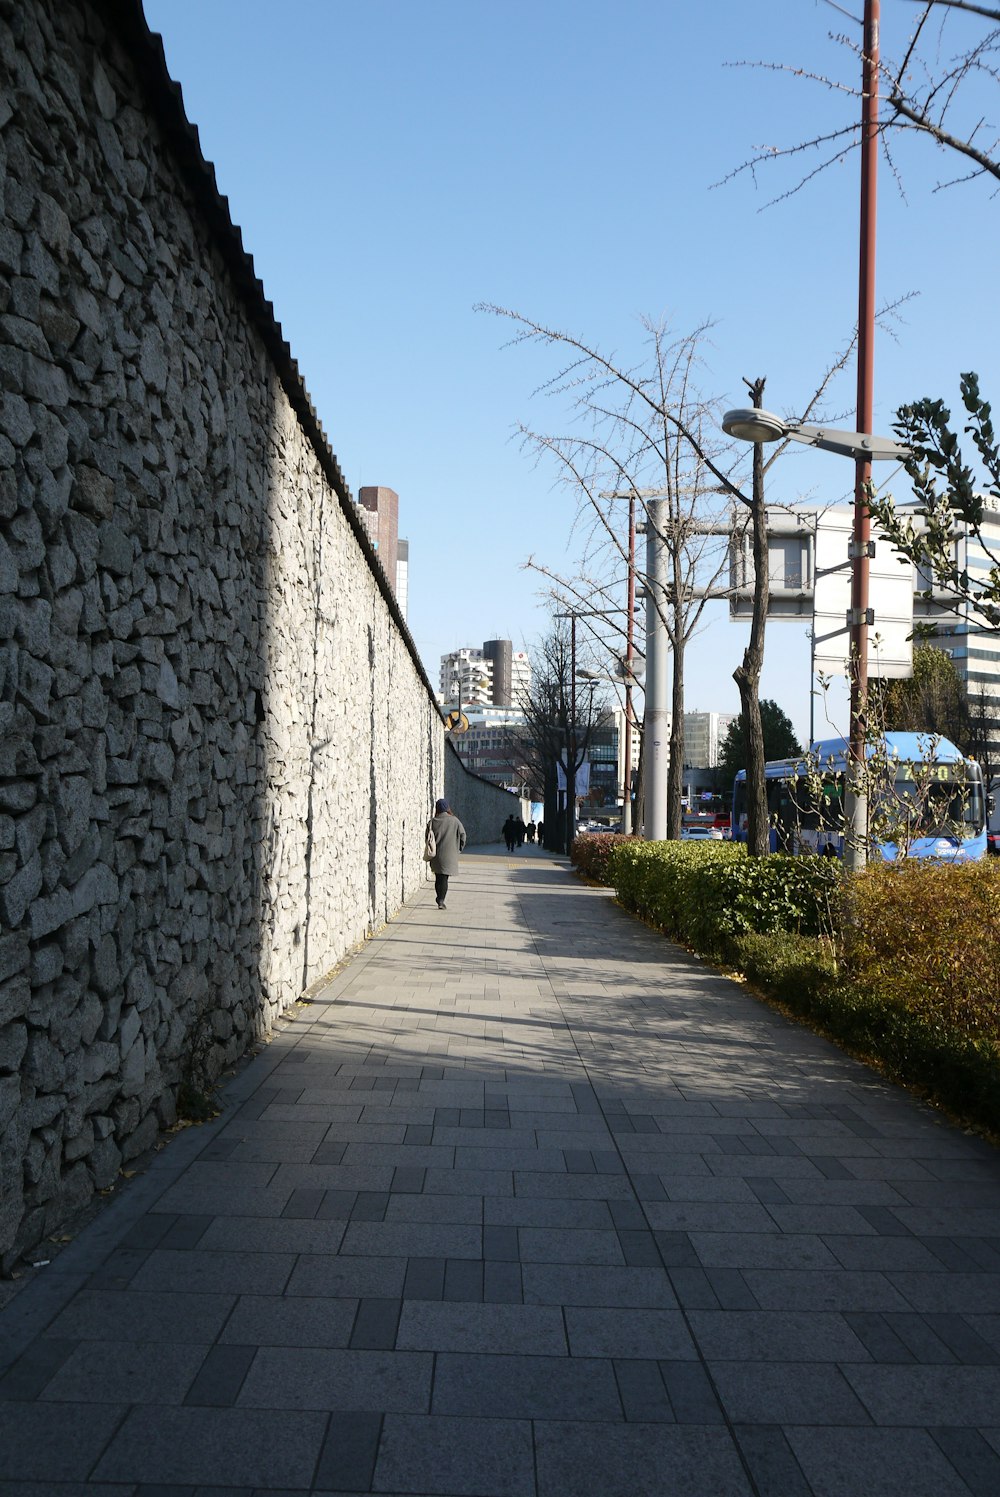 a person walking down a sidewalk next to a stone wall